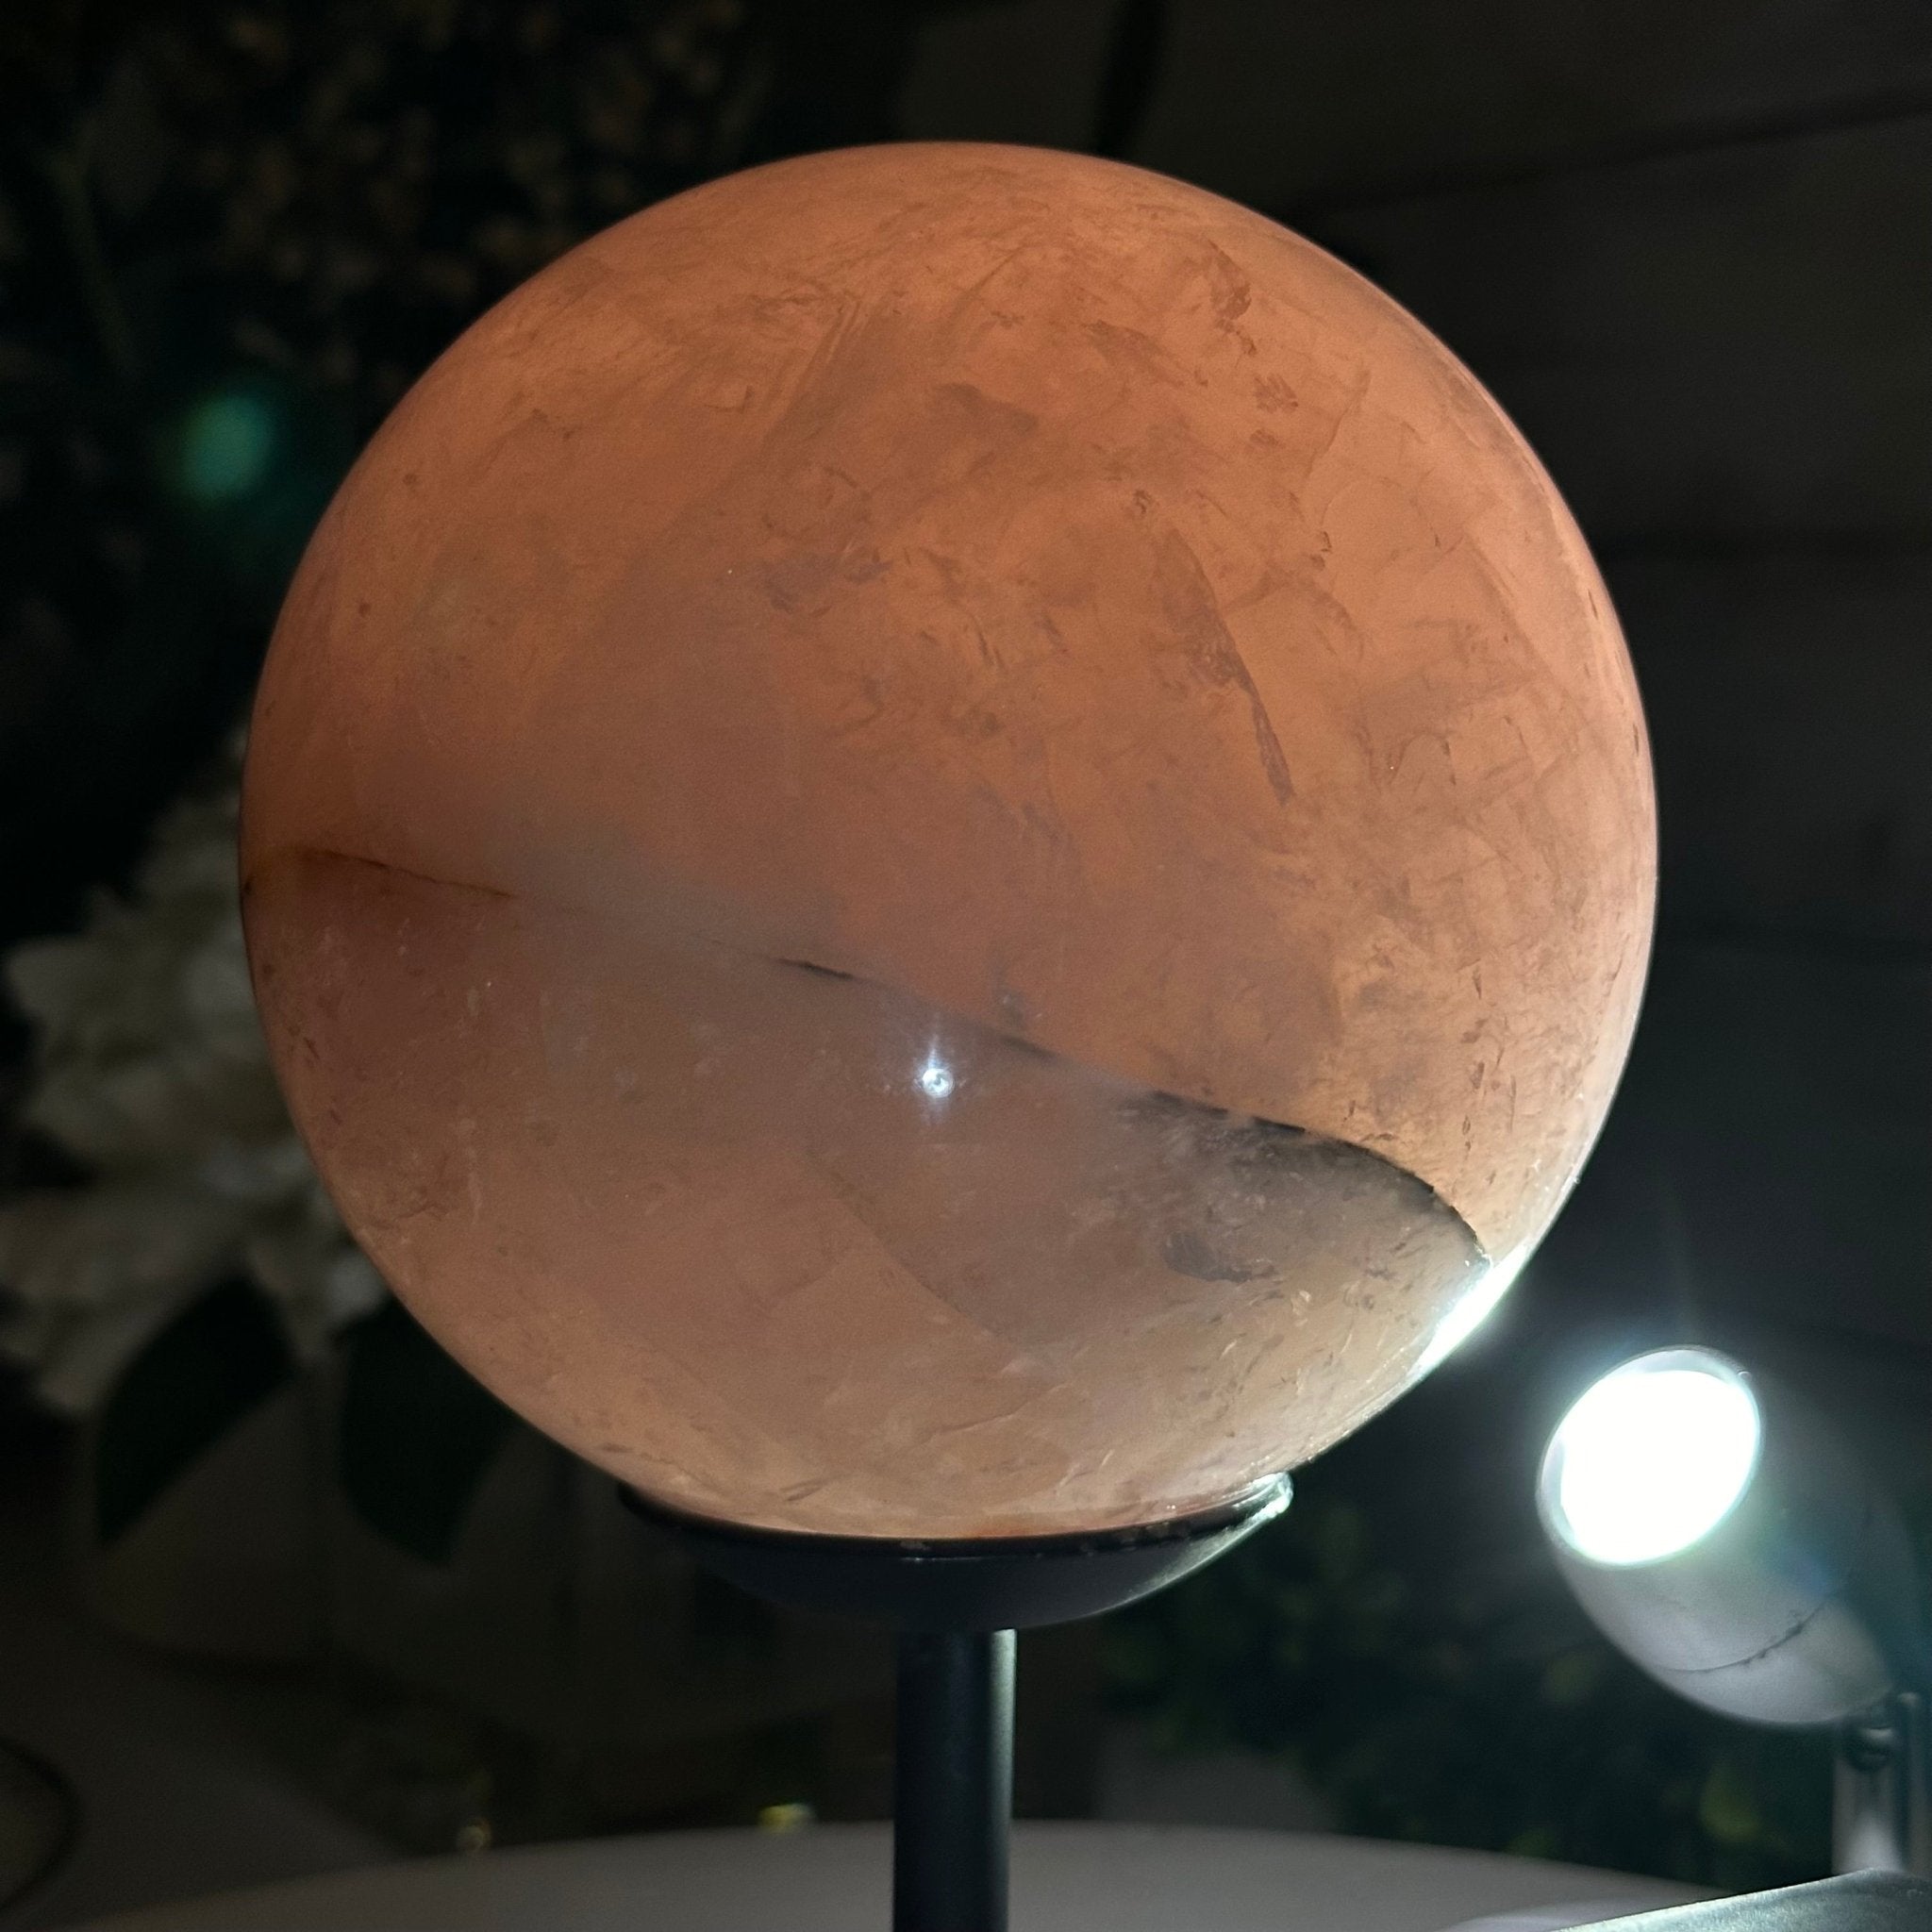 Rose Quartz Sphere on a Metal Stand, 4.2 lbs & 7.6" Tall #5632 - 0017 - Brazil GemsBrazil GemsRose Quartz Sphere on a Metal Stand, 4.2 lbs & 7.6" Tall #5632 - 0017Spheres5632 - 0017